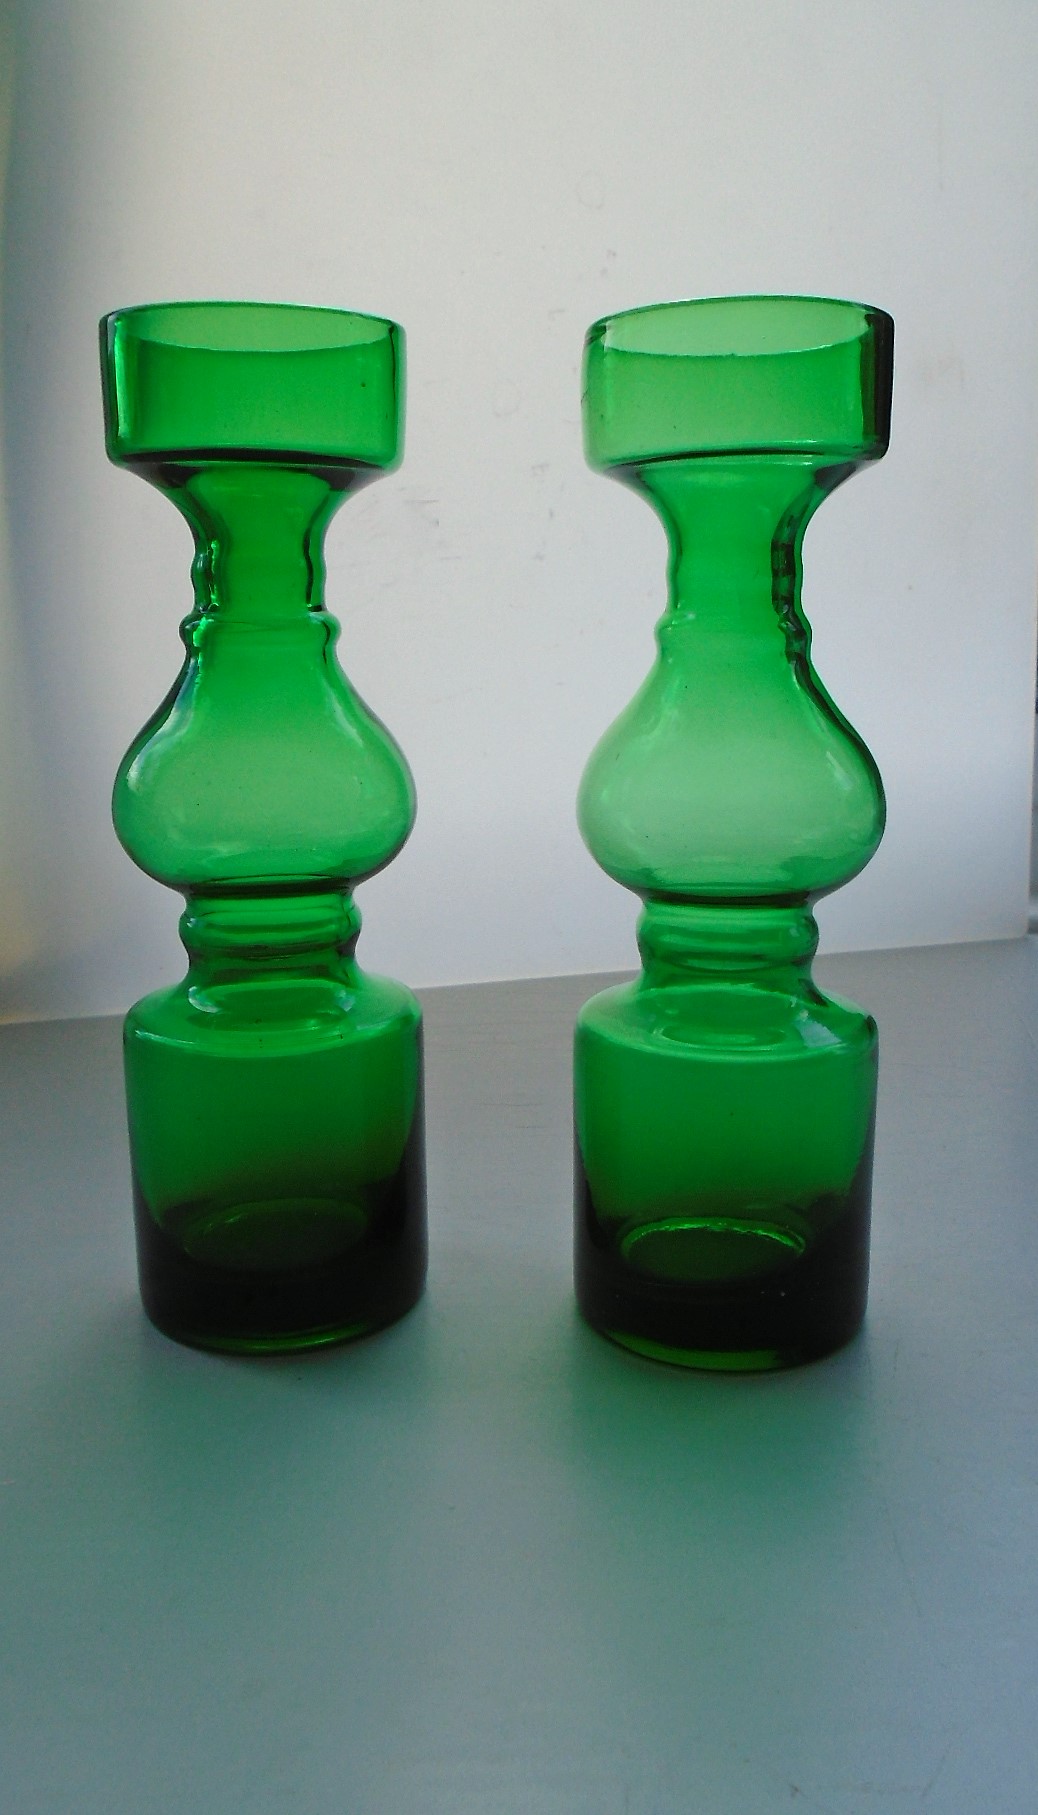  Pair of Scandinavian style Japanese 1970's Retro Hooped Green Glass Vases